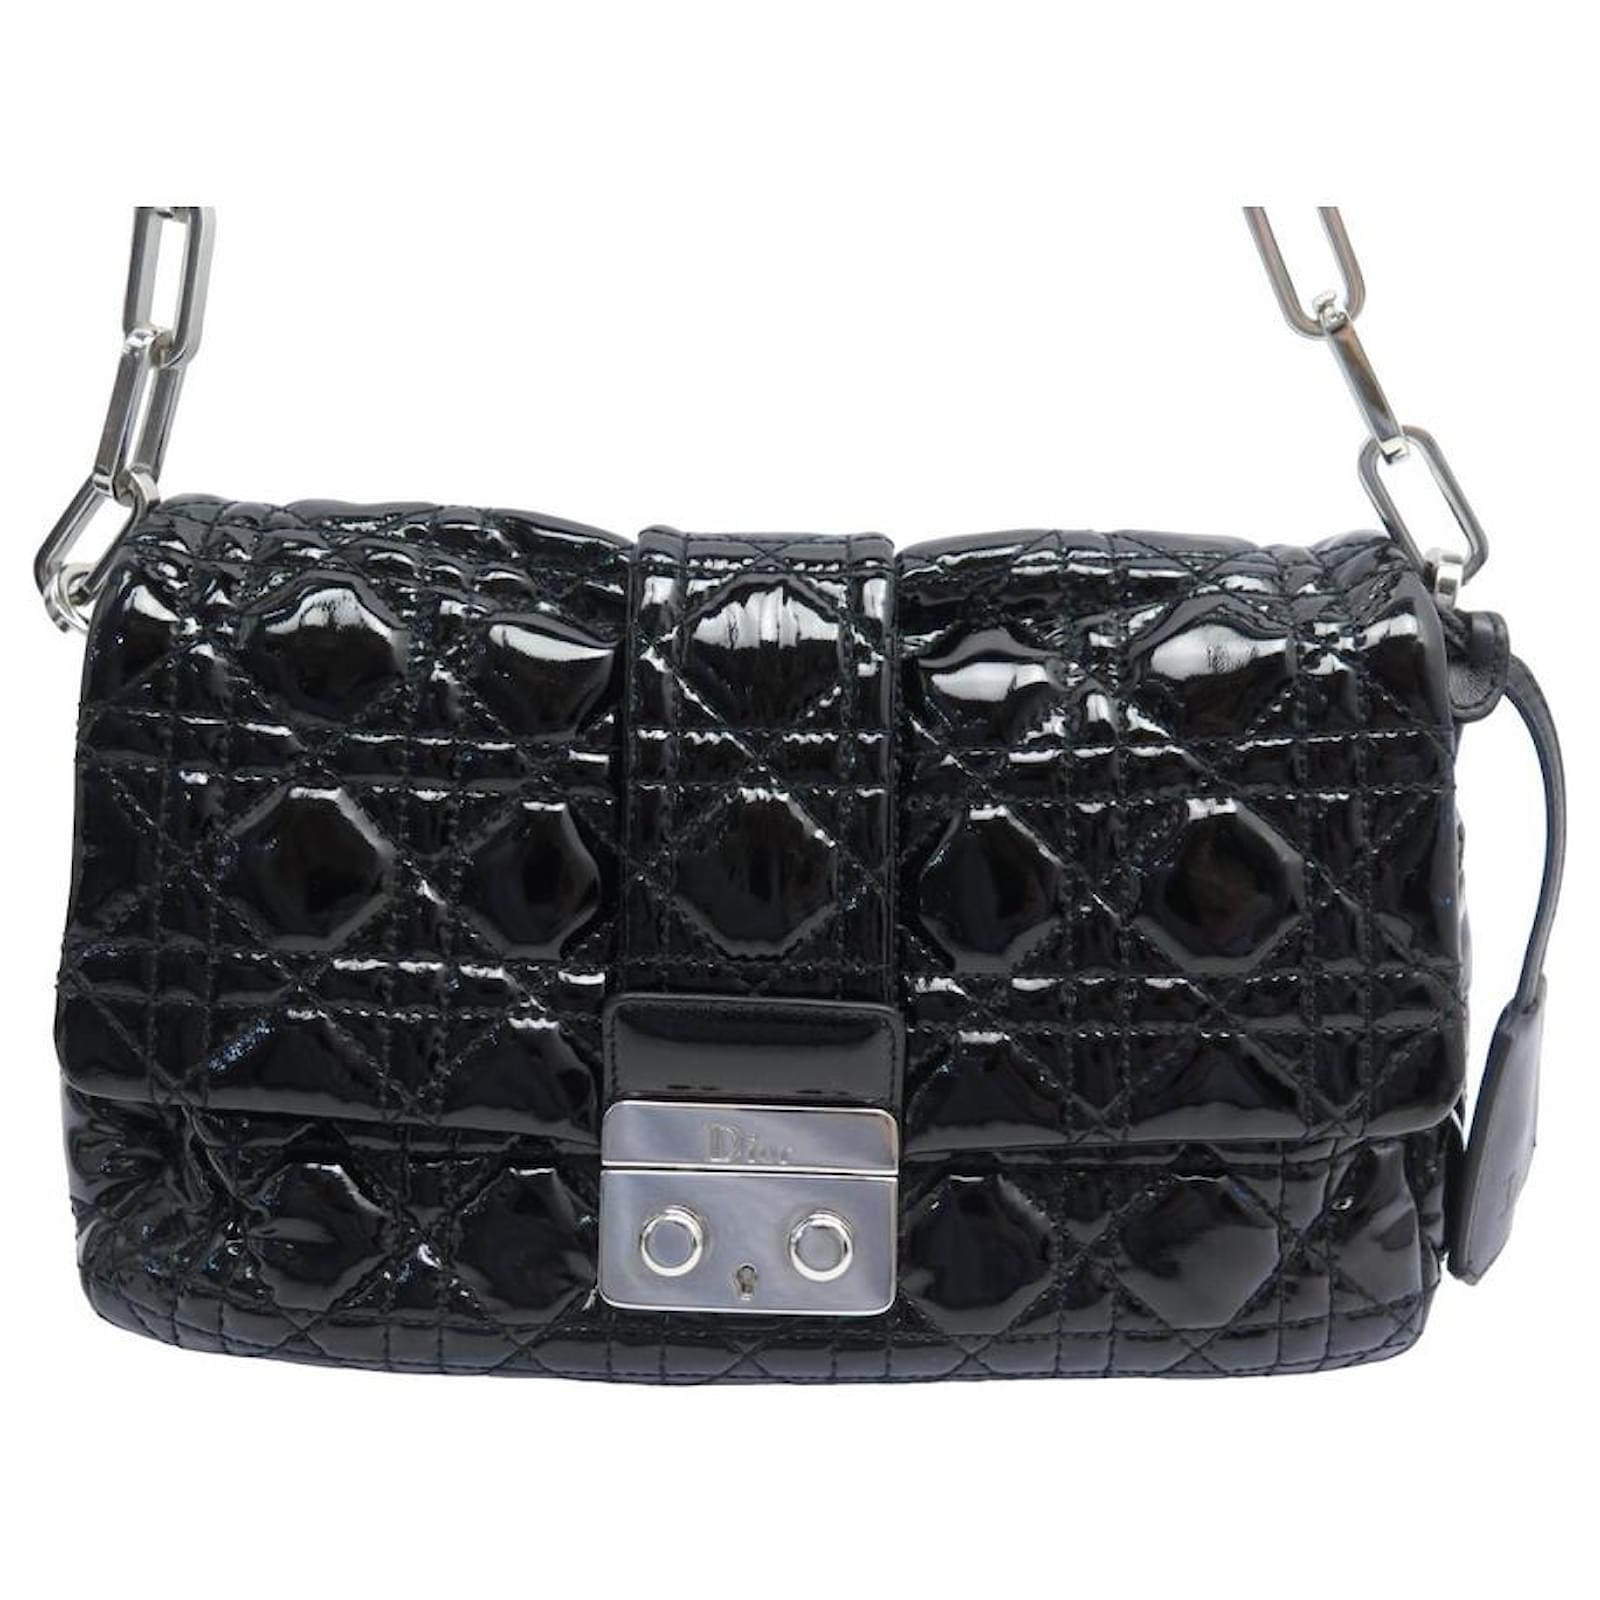 Christian Dior Medium Black Patent Leather Lady Dior Bag